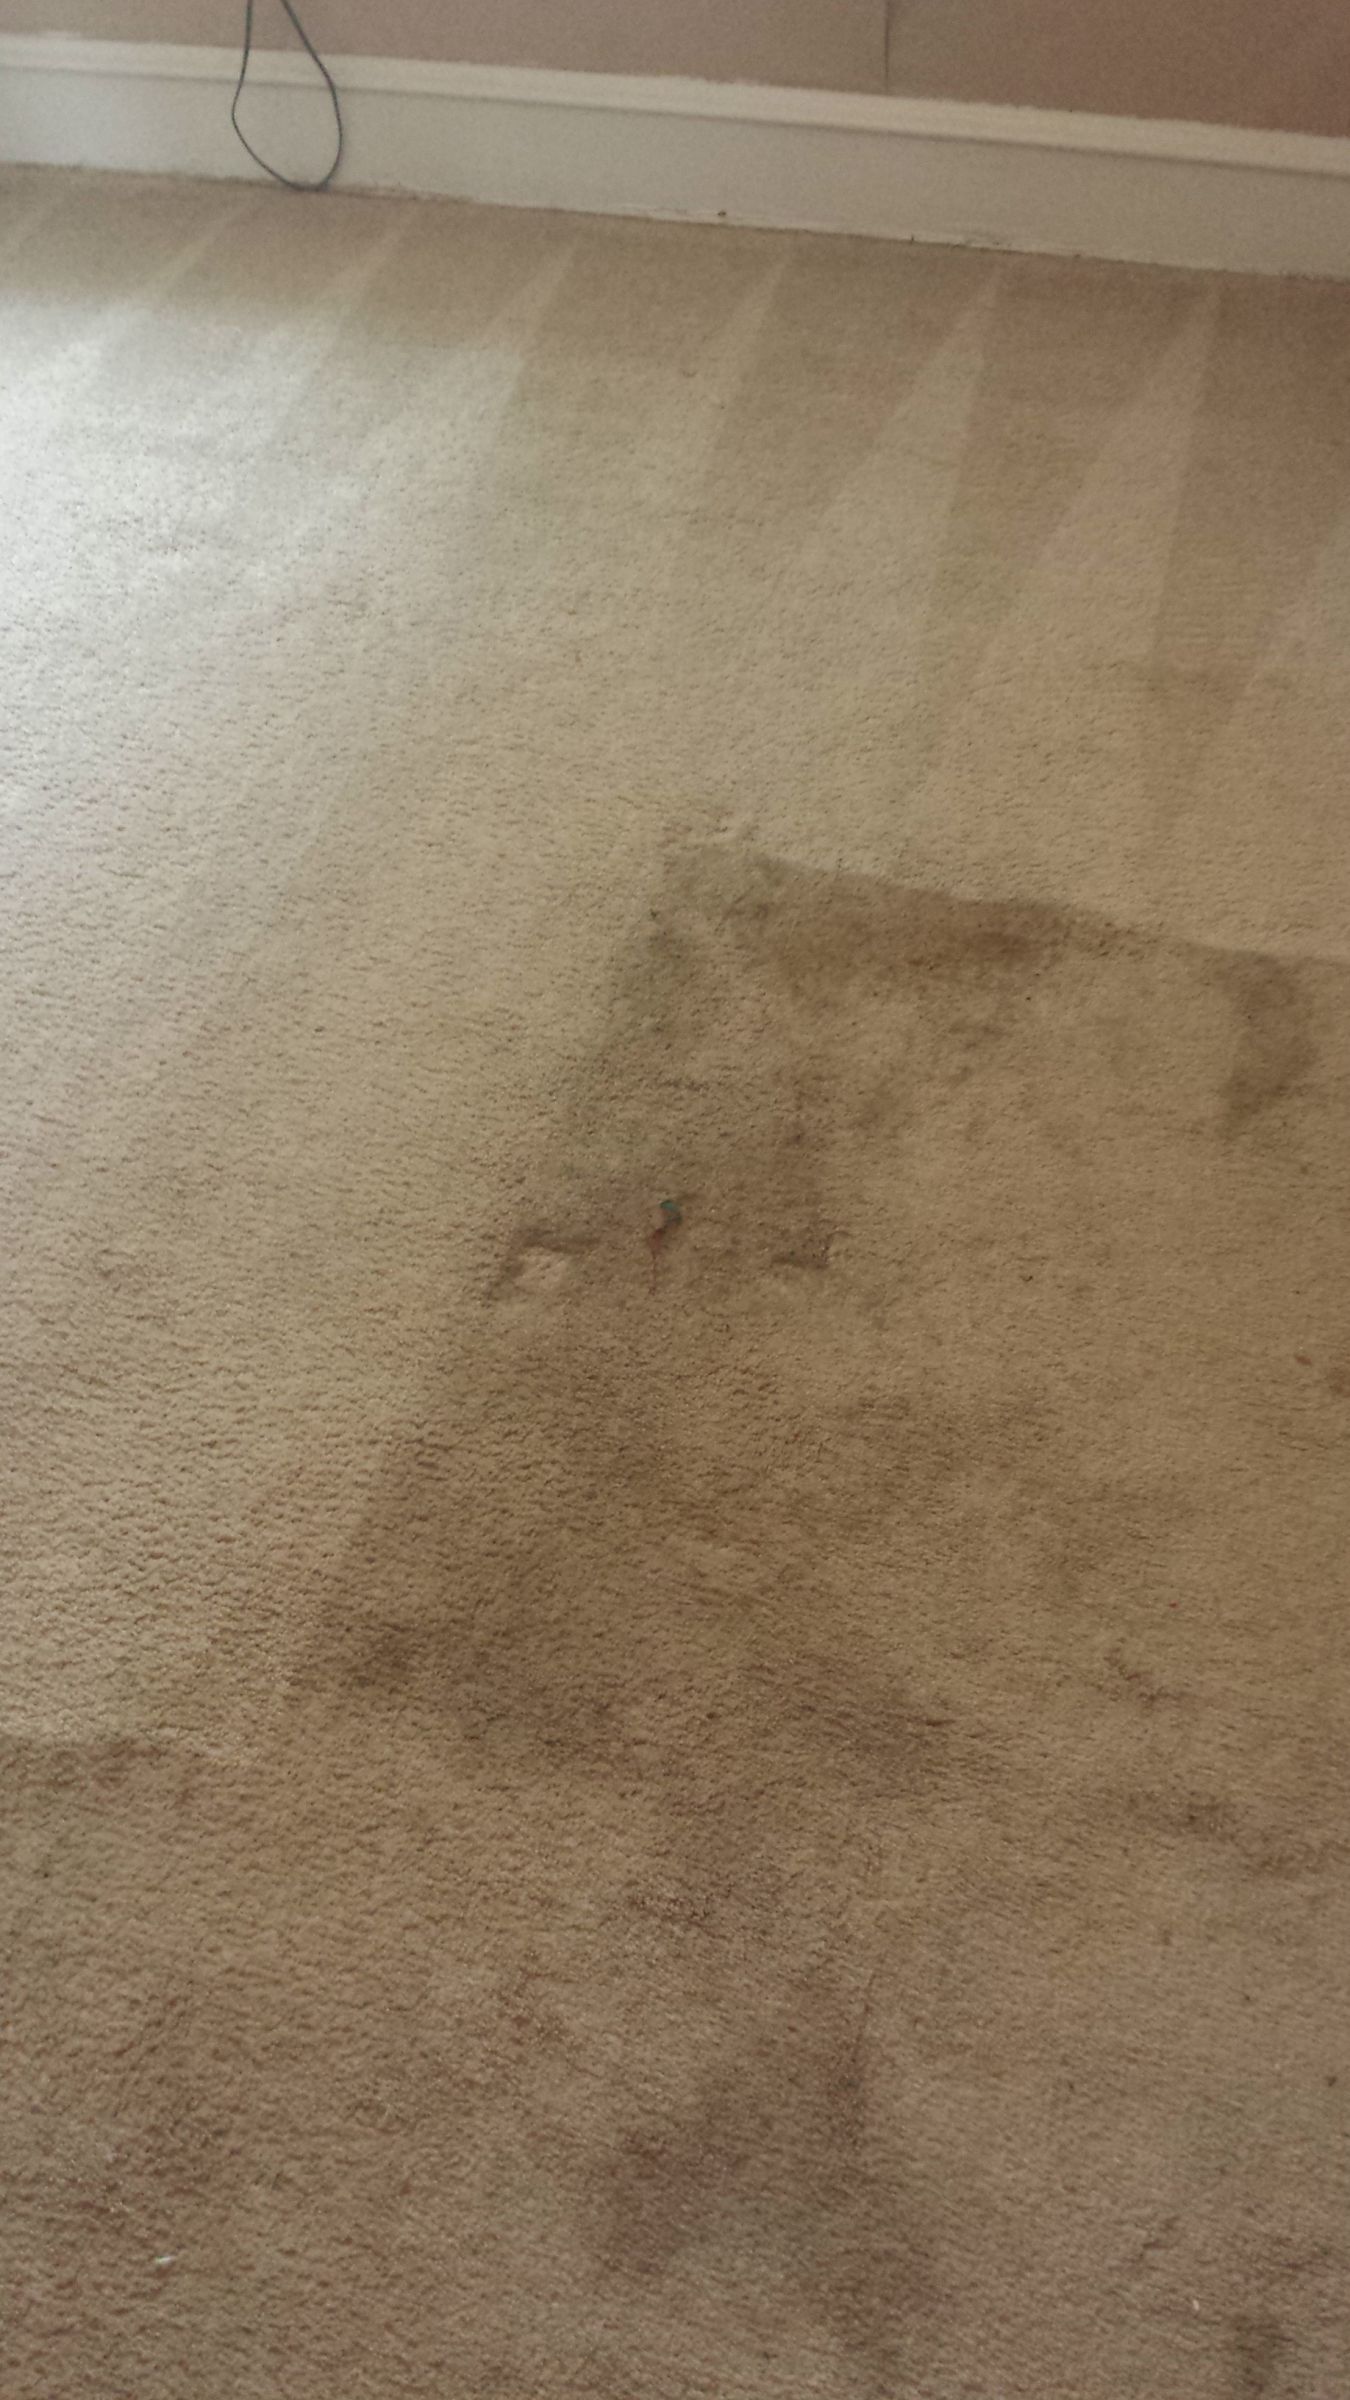 Expert Help From Moorestown Carpet Cleaner